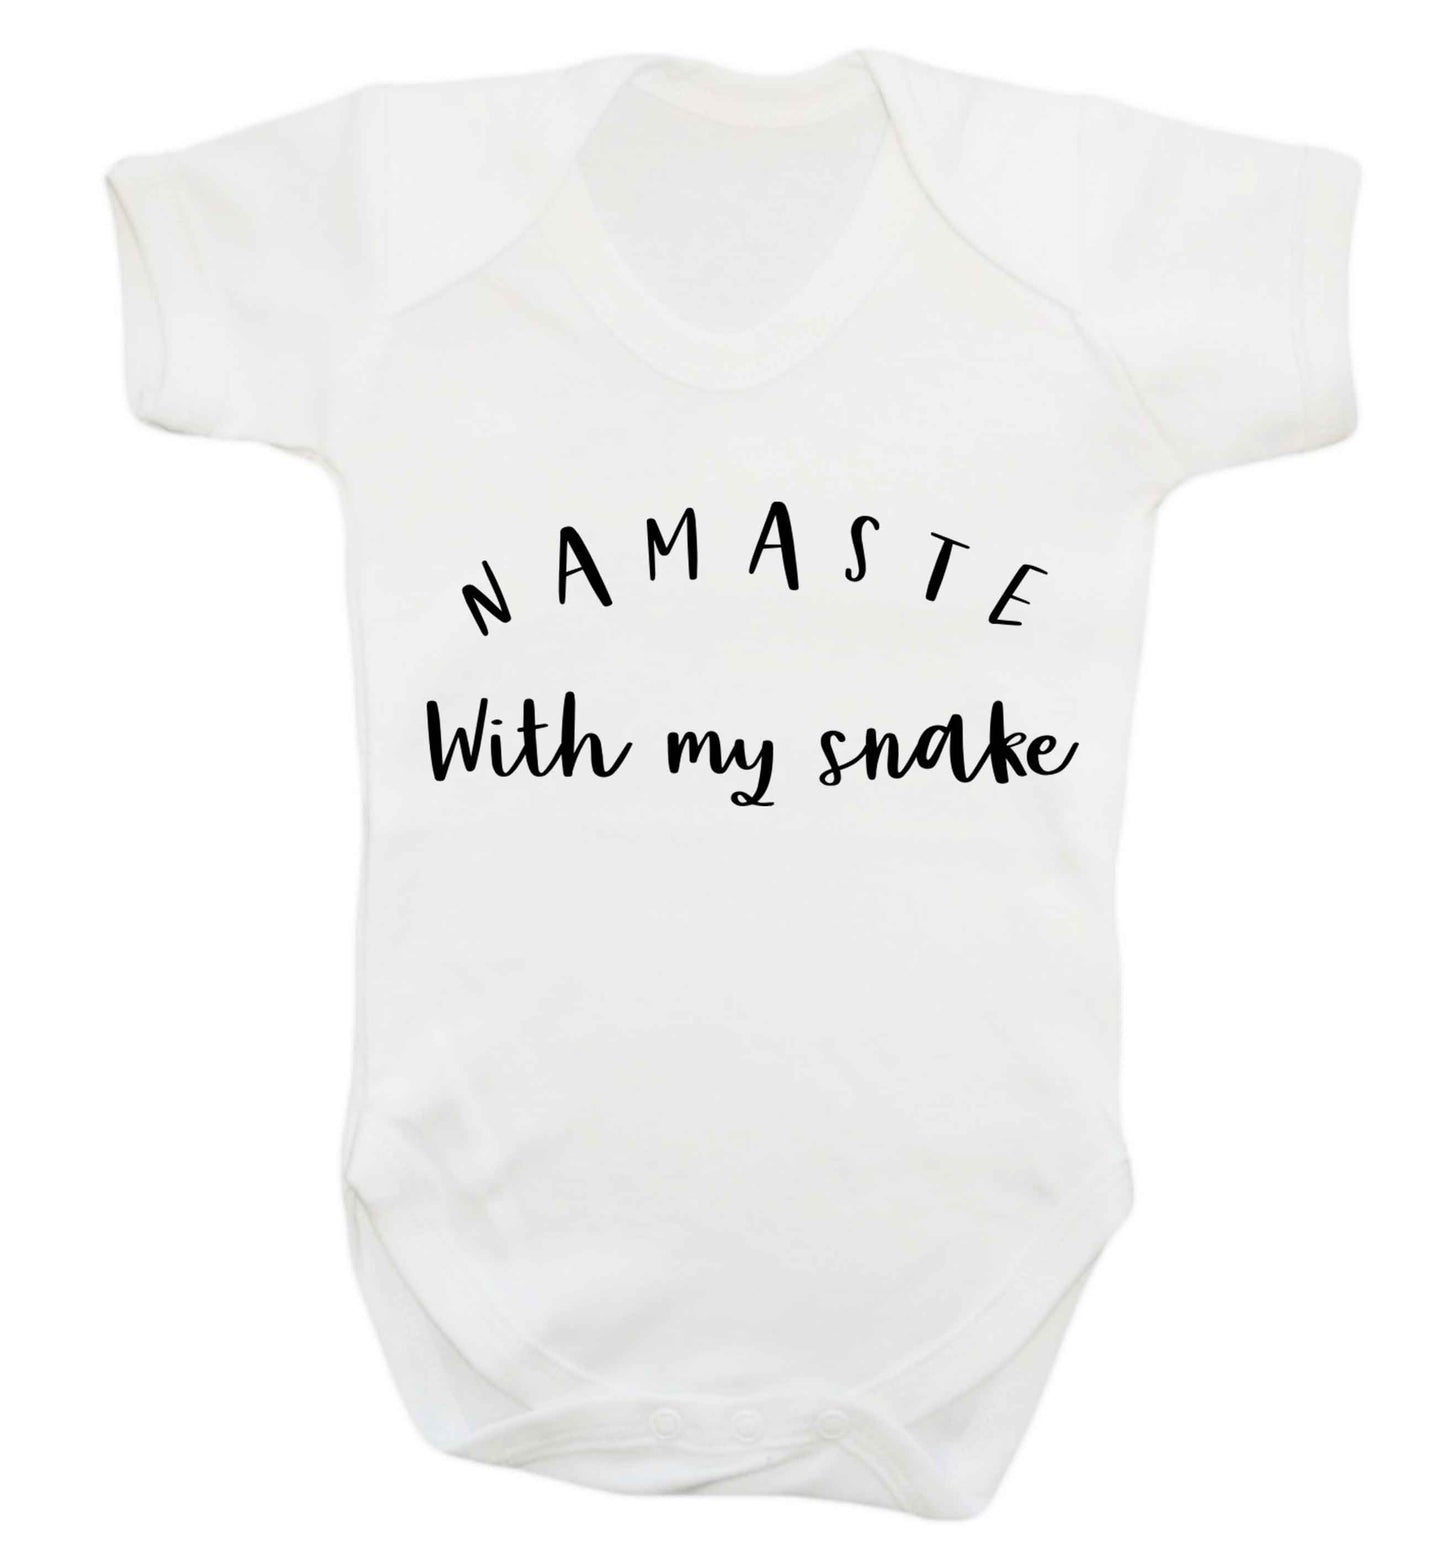 Namaste with my snake Baby Vest white 18-24 months